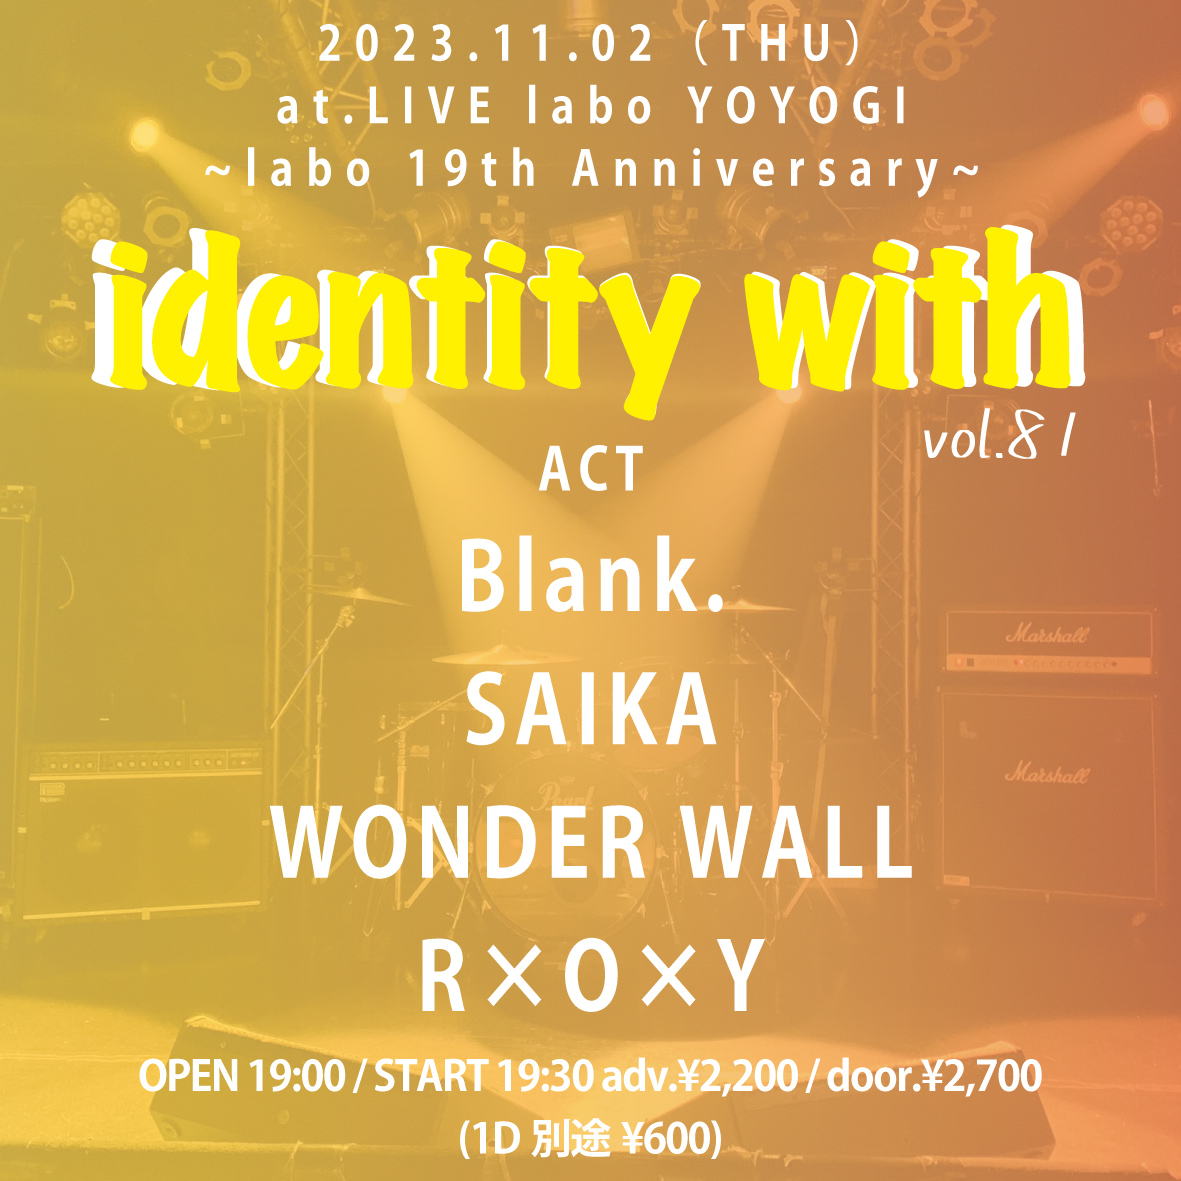 ～ labo 19th Anniversary!! ～
identity with vol.81